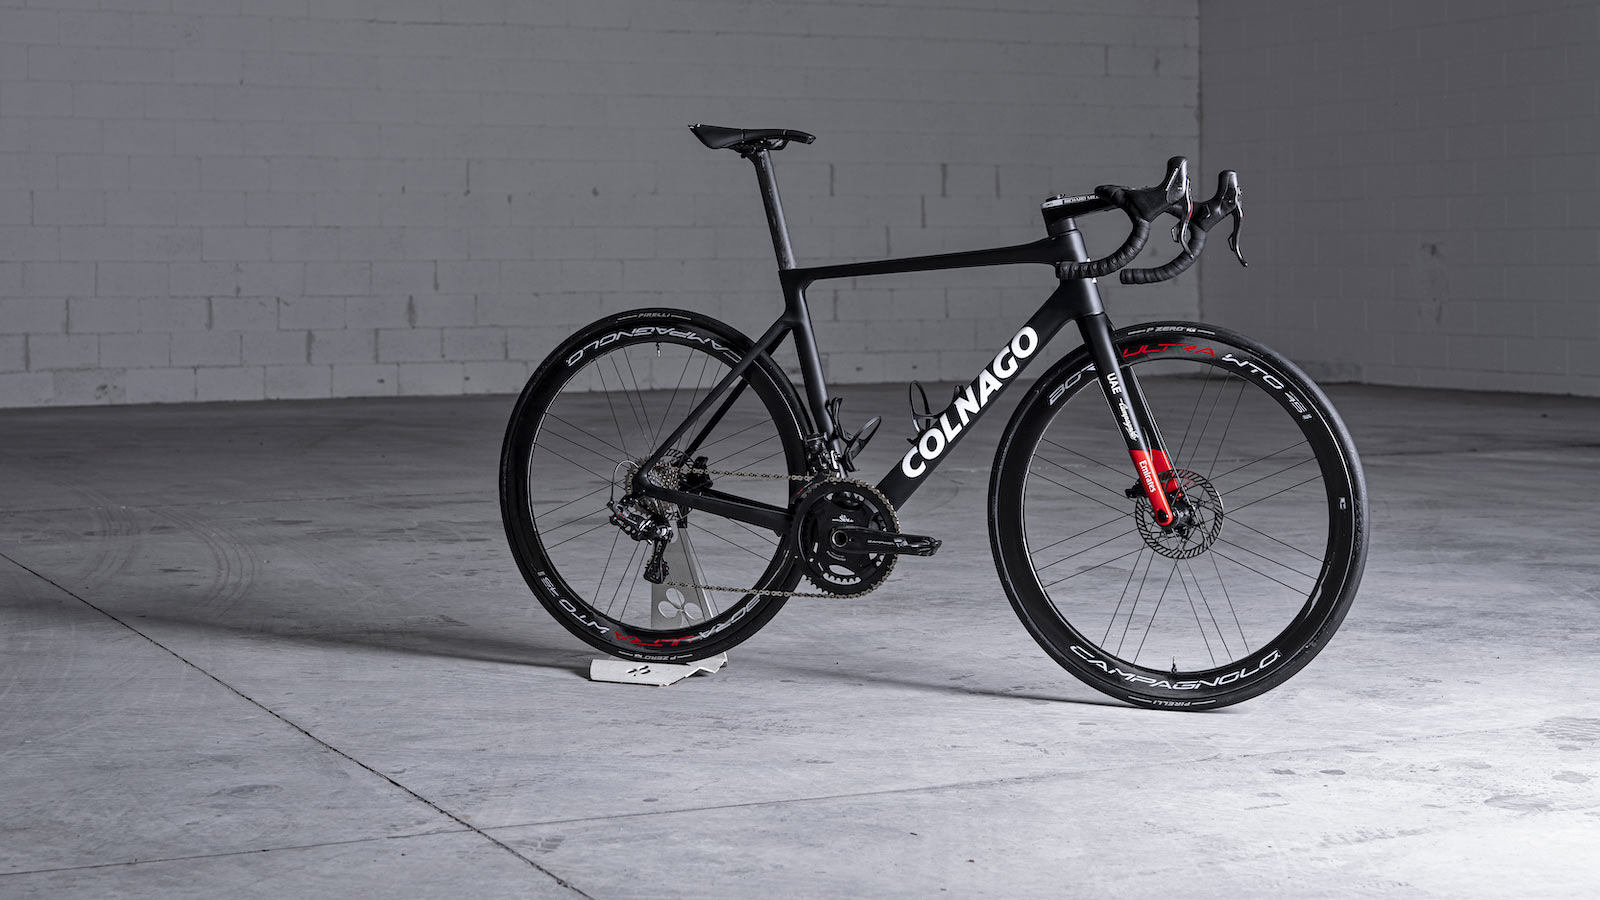 Colnago Prototipo V4R prototype all-rounder lightweight aero road bike, coming soon